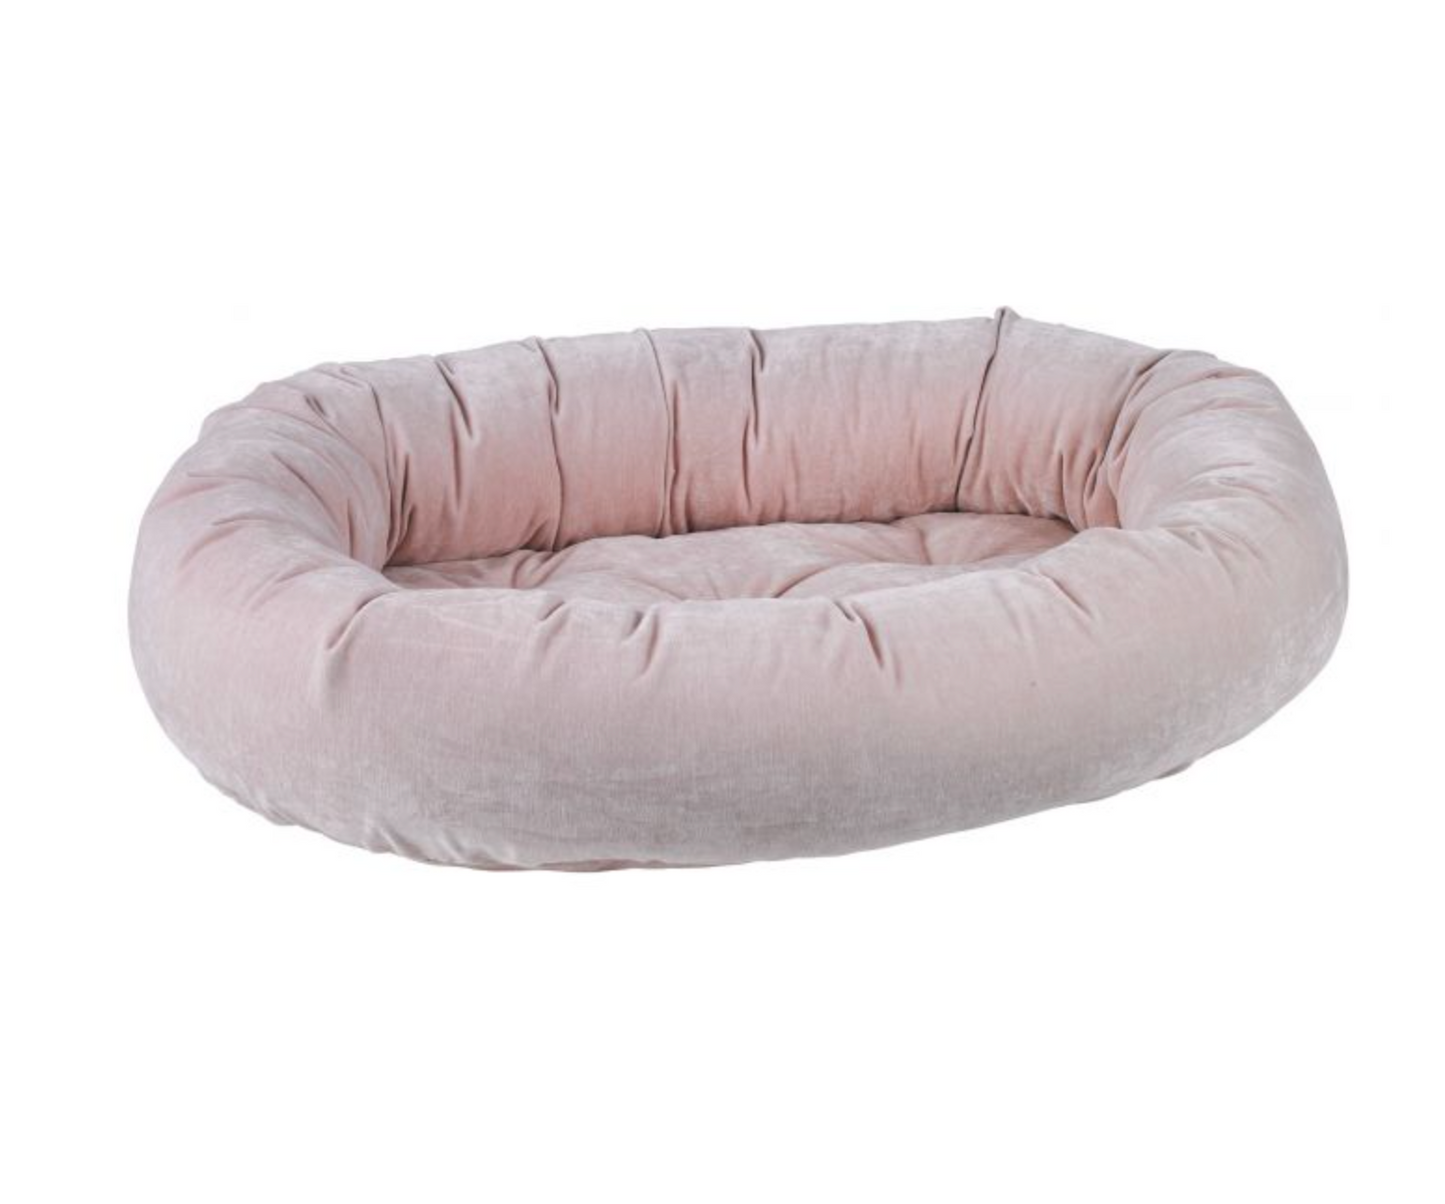 Donut Pet Bed - Blush